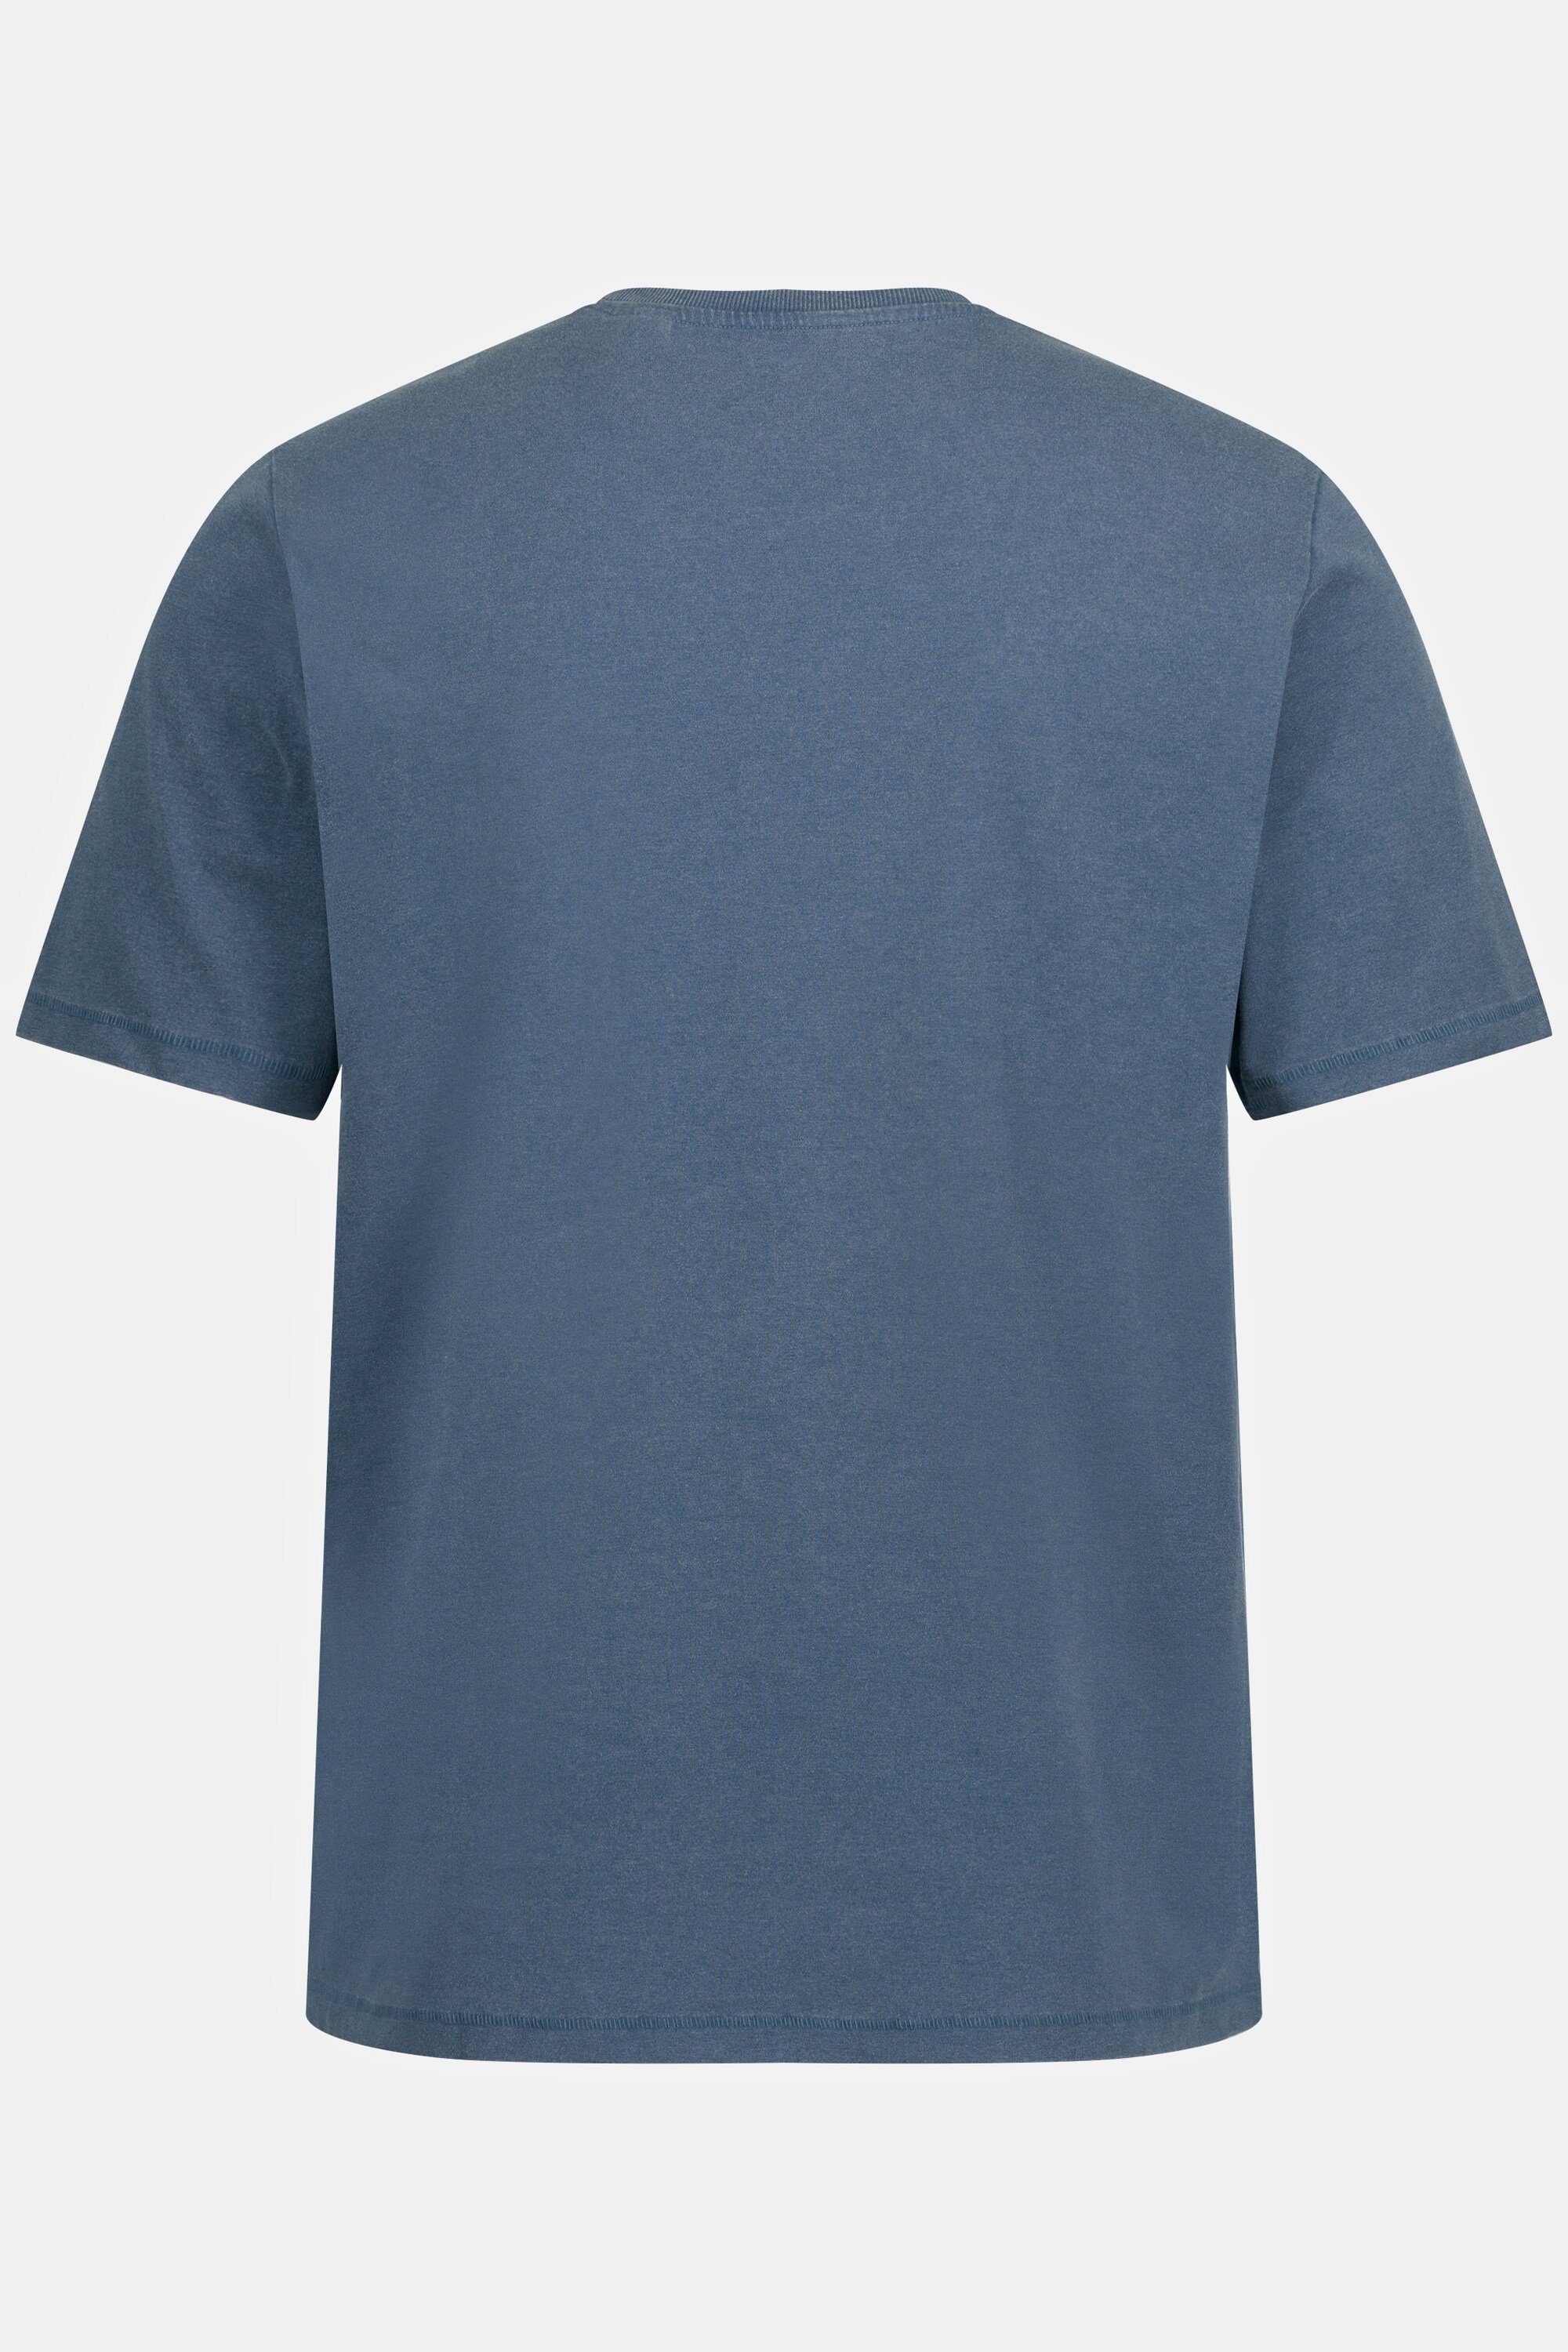 JP1880 T-Shirt T-Shirt Biobaumwolle blue washed denim acid Flammjersey